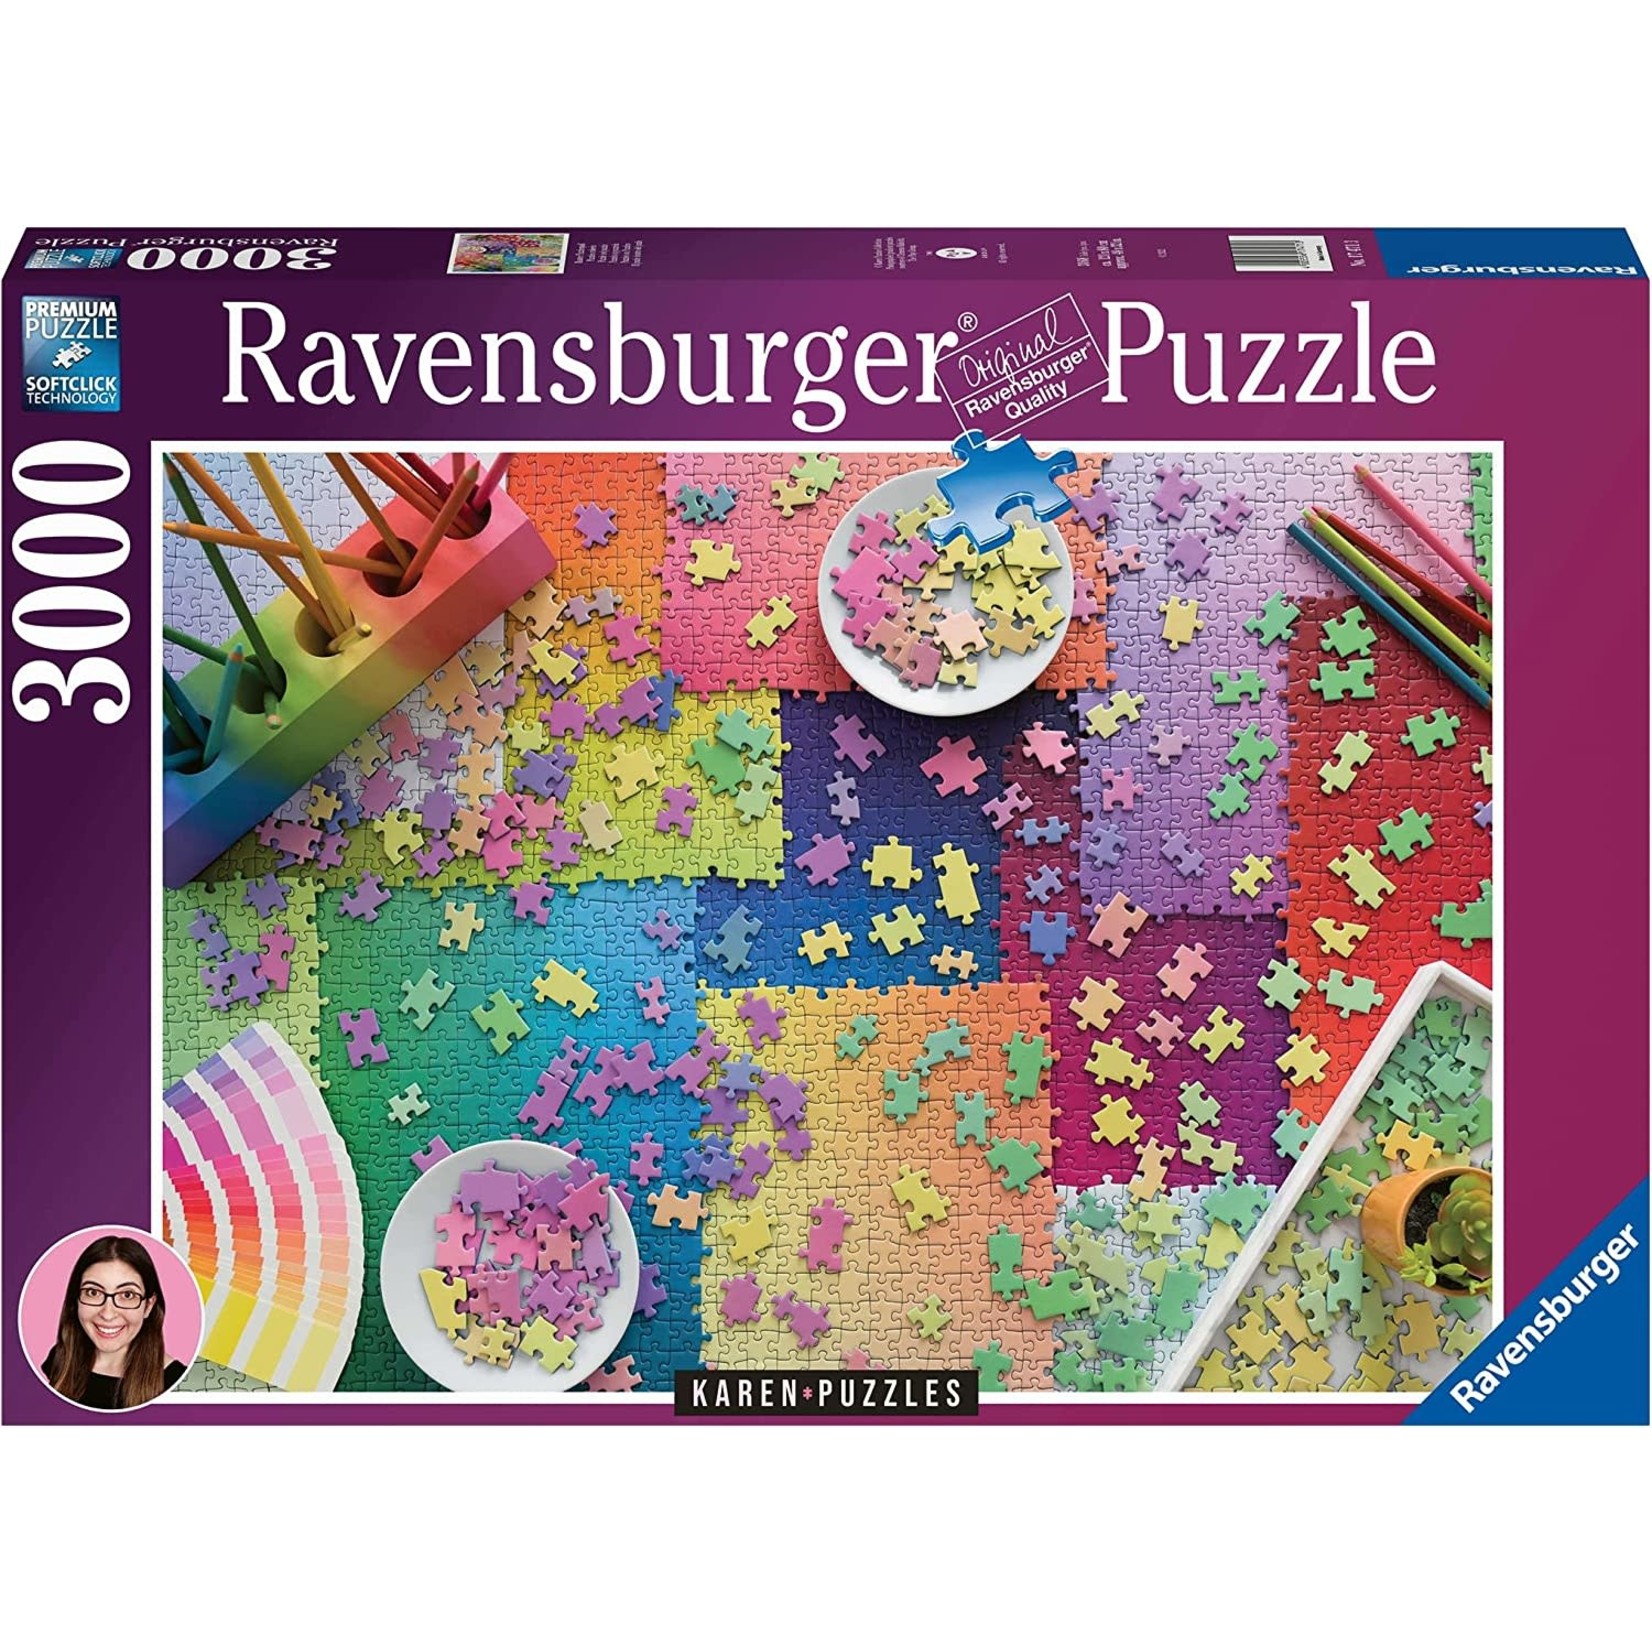 Ravensburger Karen Puzzles on Puzzles